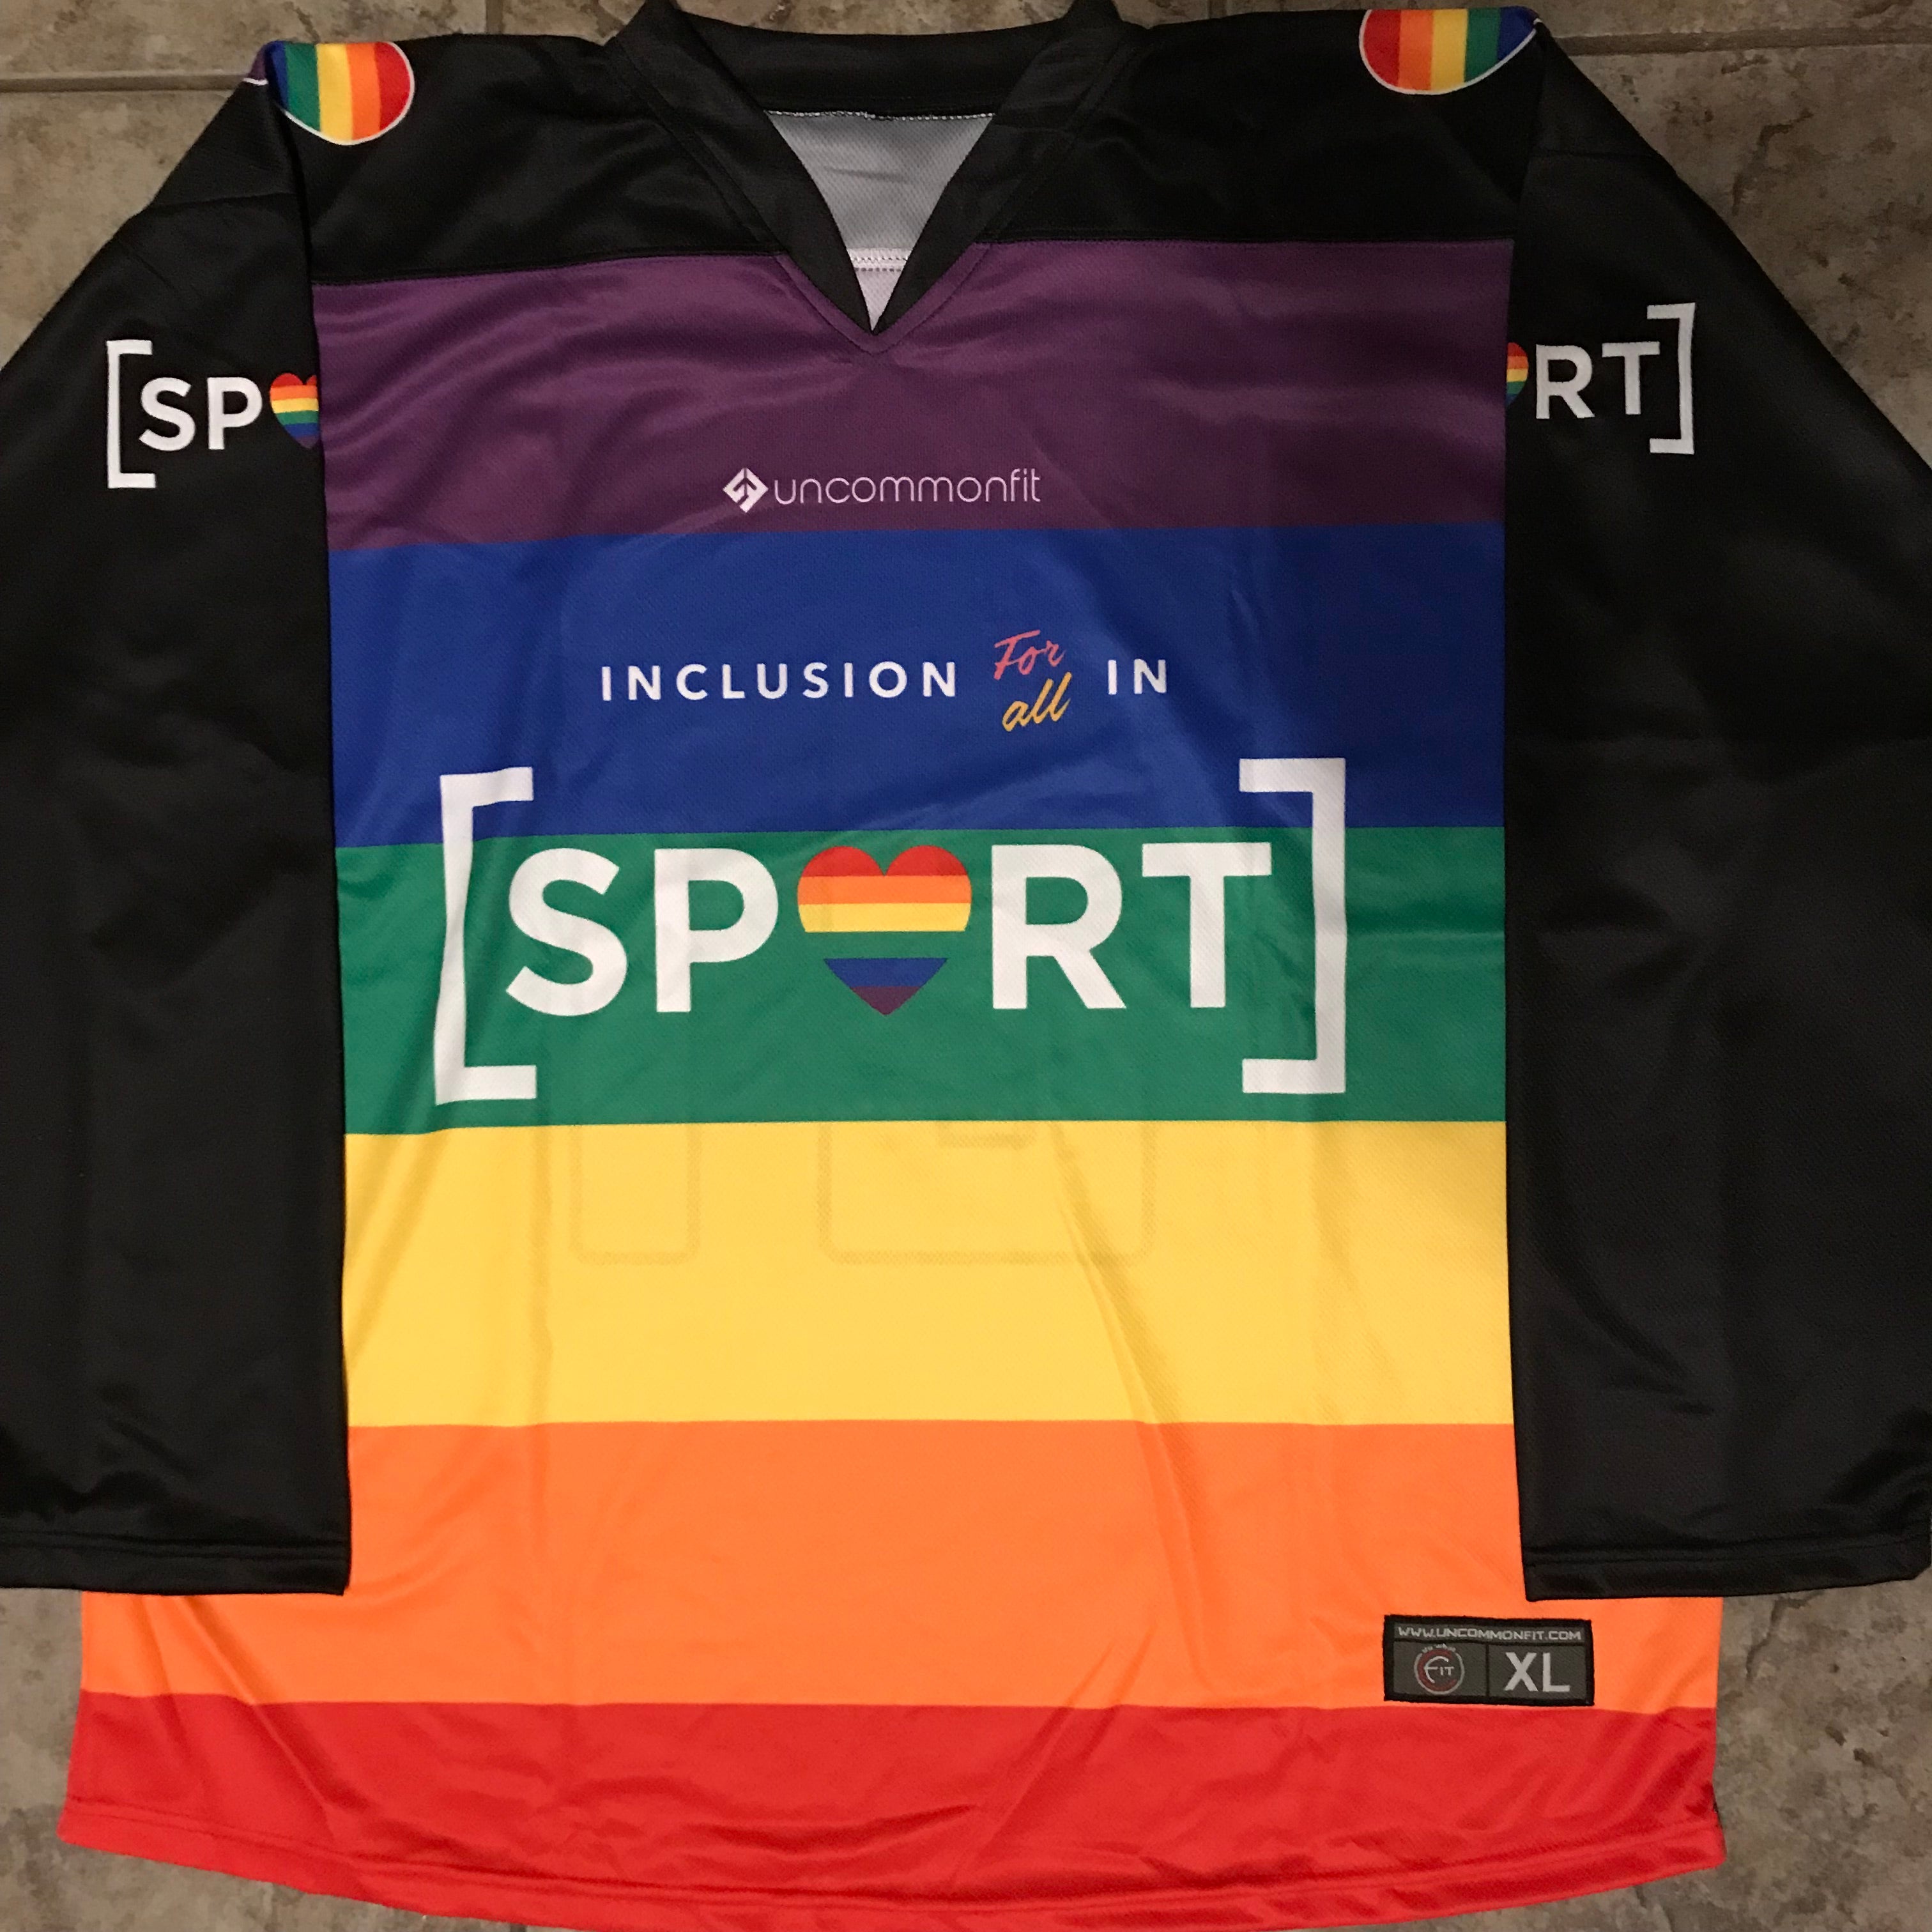 https://www.uncommonfit/products/sport-a-rainbow-jerseys